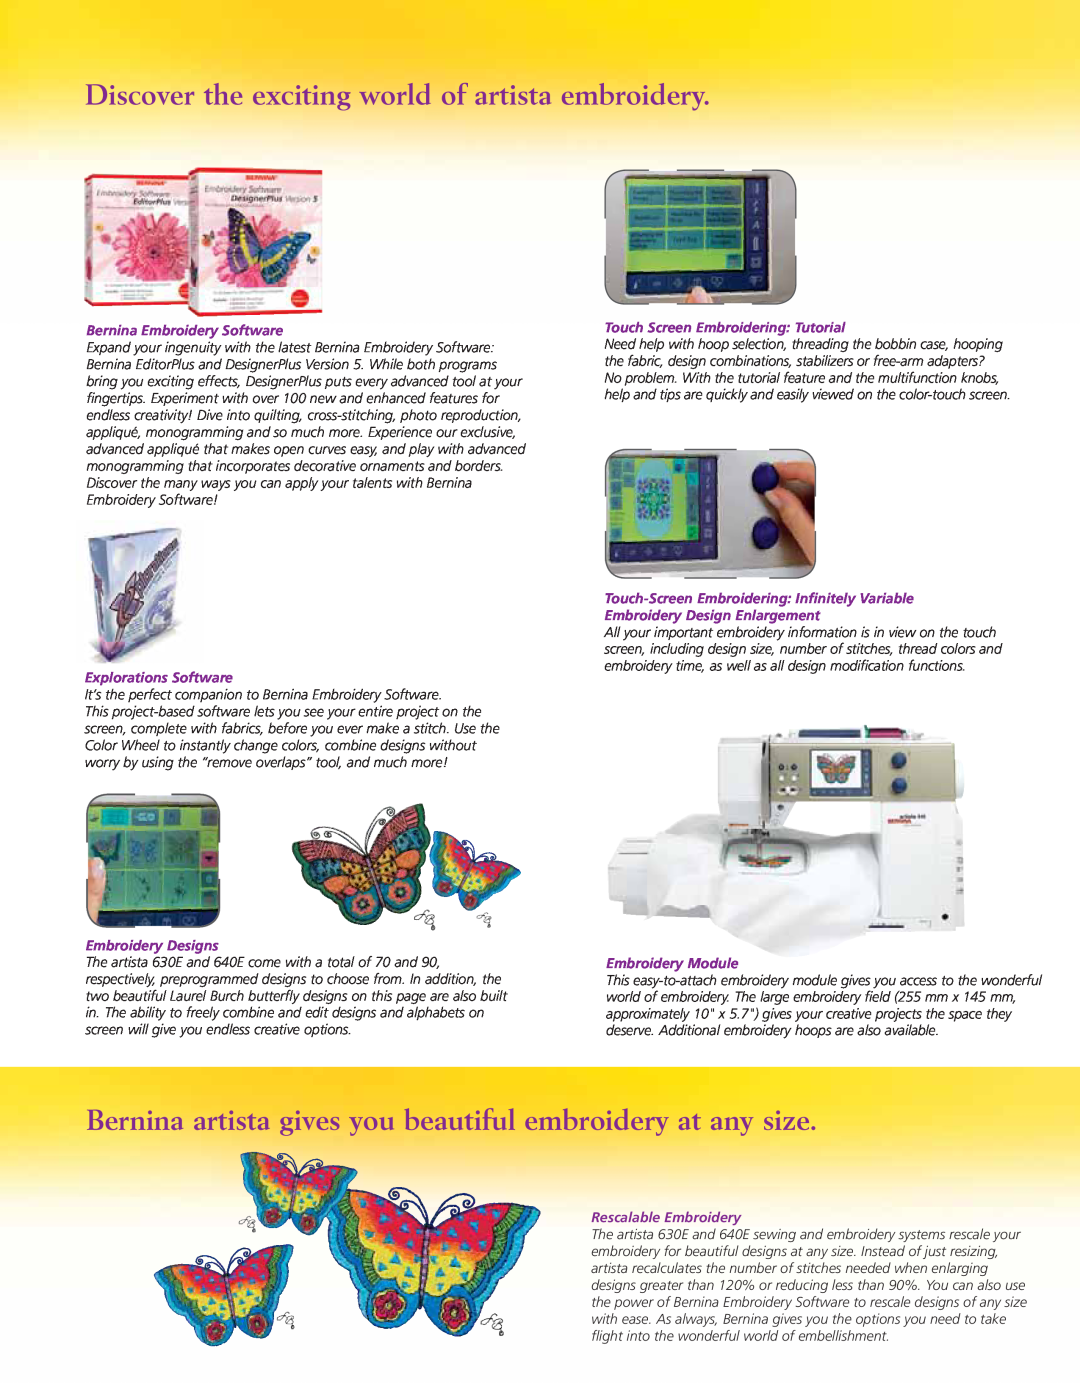 Bernina 630E Explorations Software, It’s the perfect companion to Bernina Embroidery Software, Embroidery Designs 